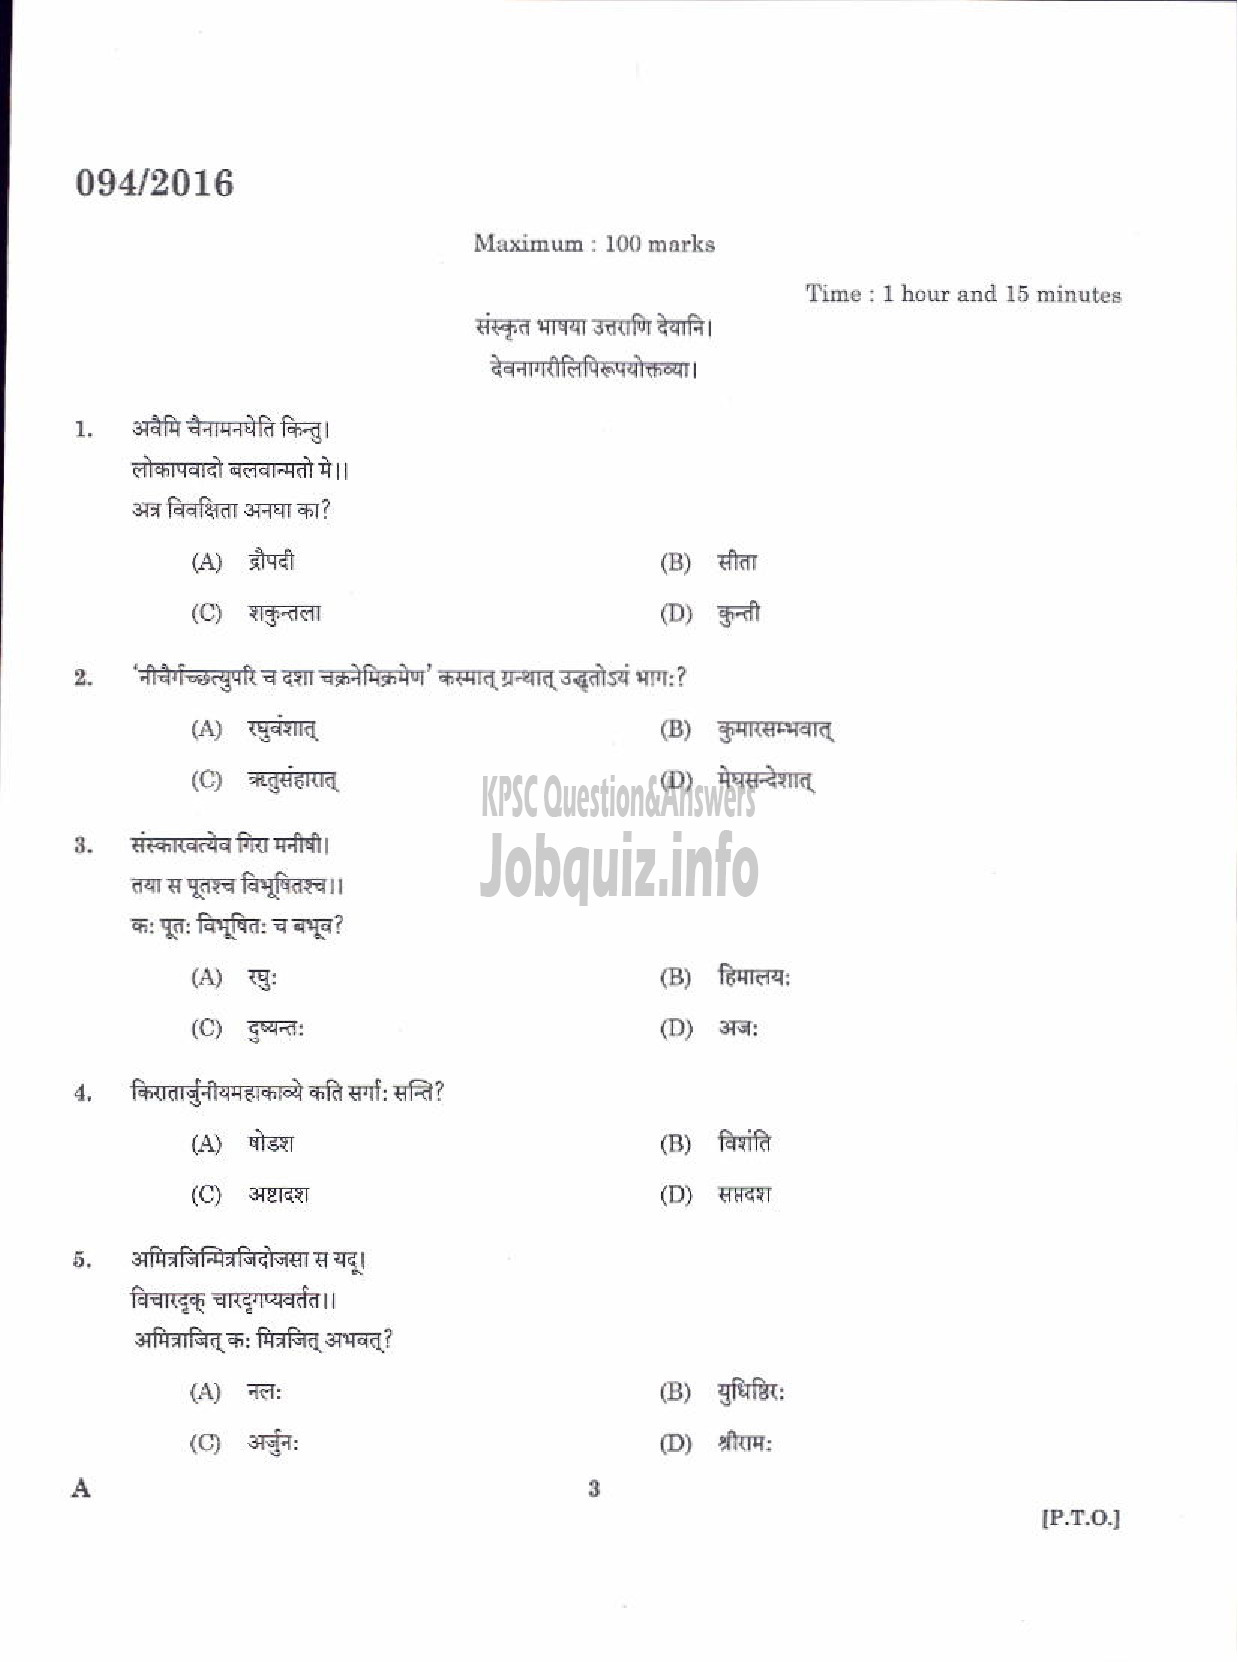 Kerala PSC Question Paper - HIGHER SECONDARY SCHOOL TEACHER JUNIOR SANSKRIT HIGHER SECONDARY EDUCATION-1